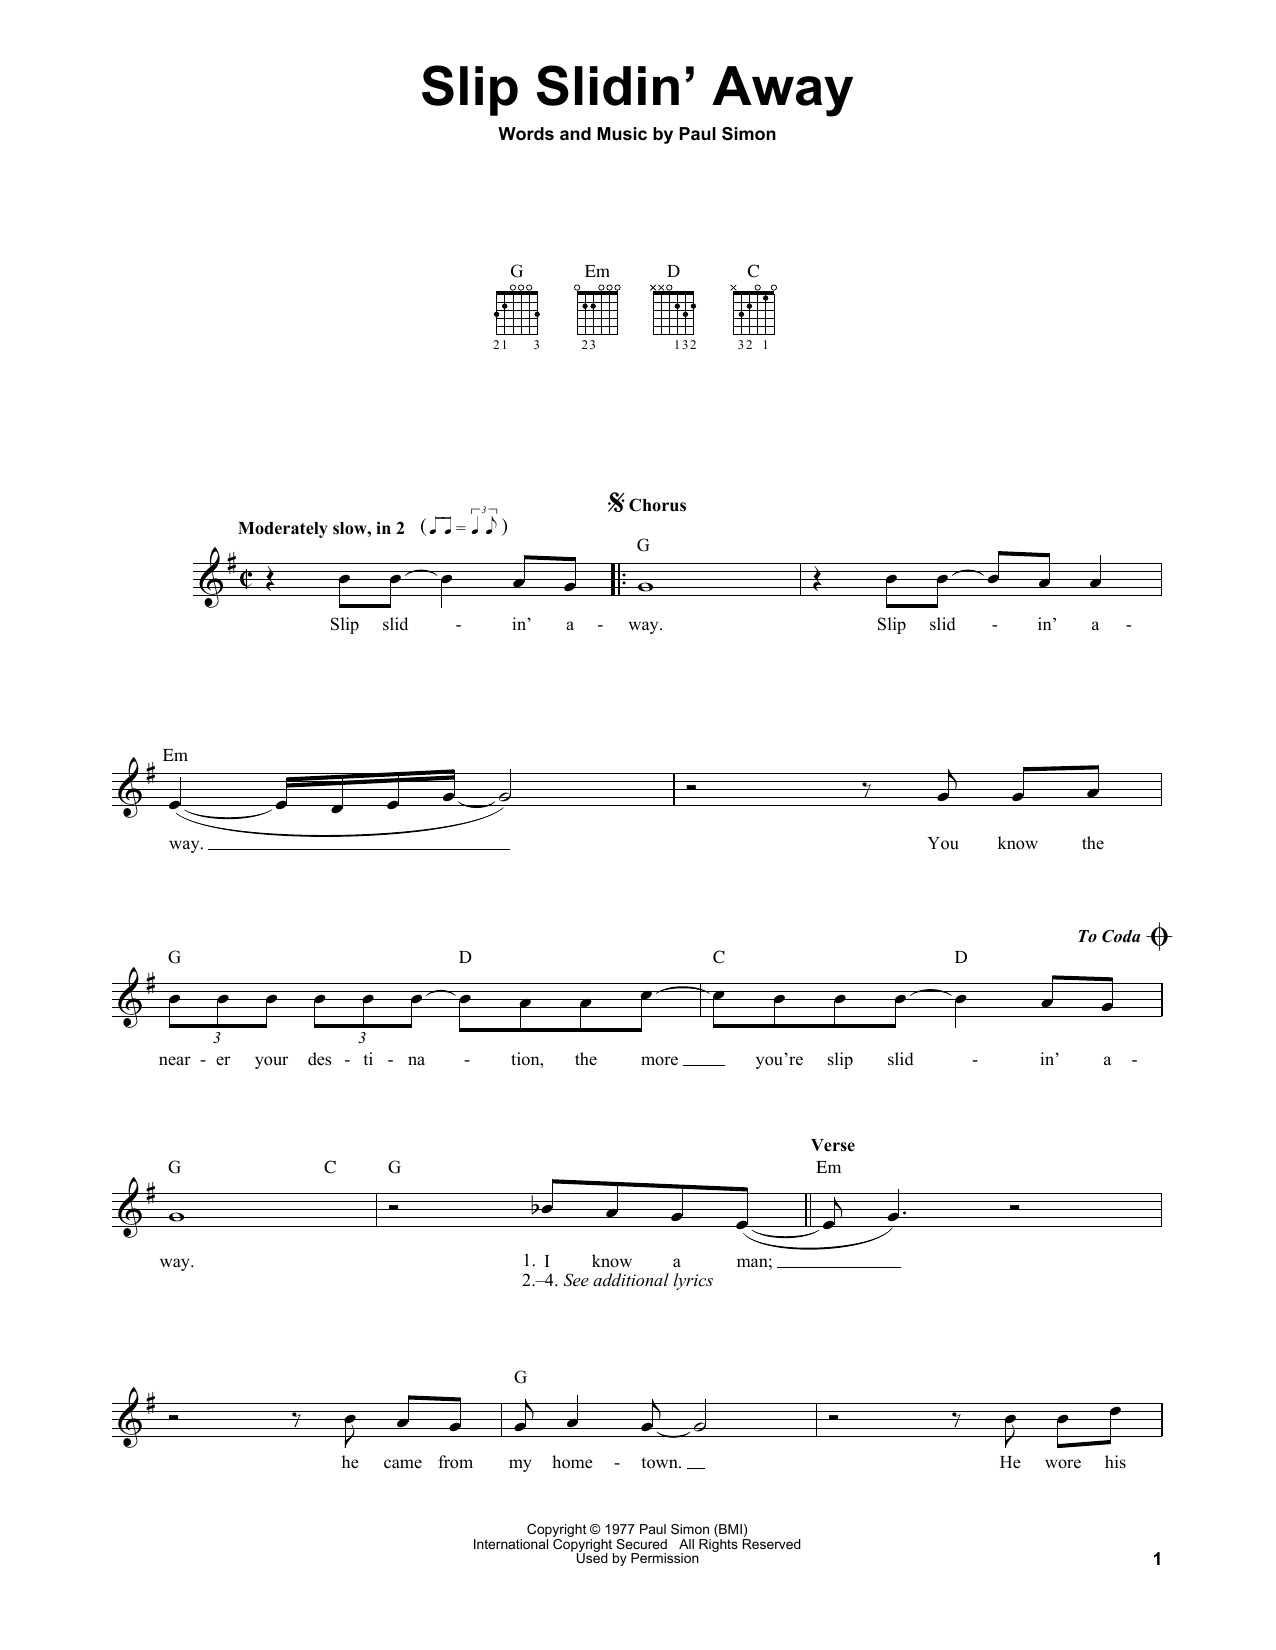 Simon & Garfunkel Slip Slidin' Away Sheet Music Notes & Chords for Ukulele - Download or Print PDF